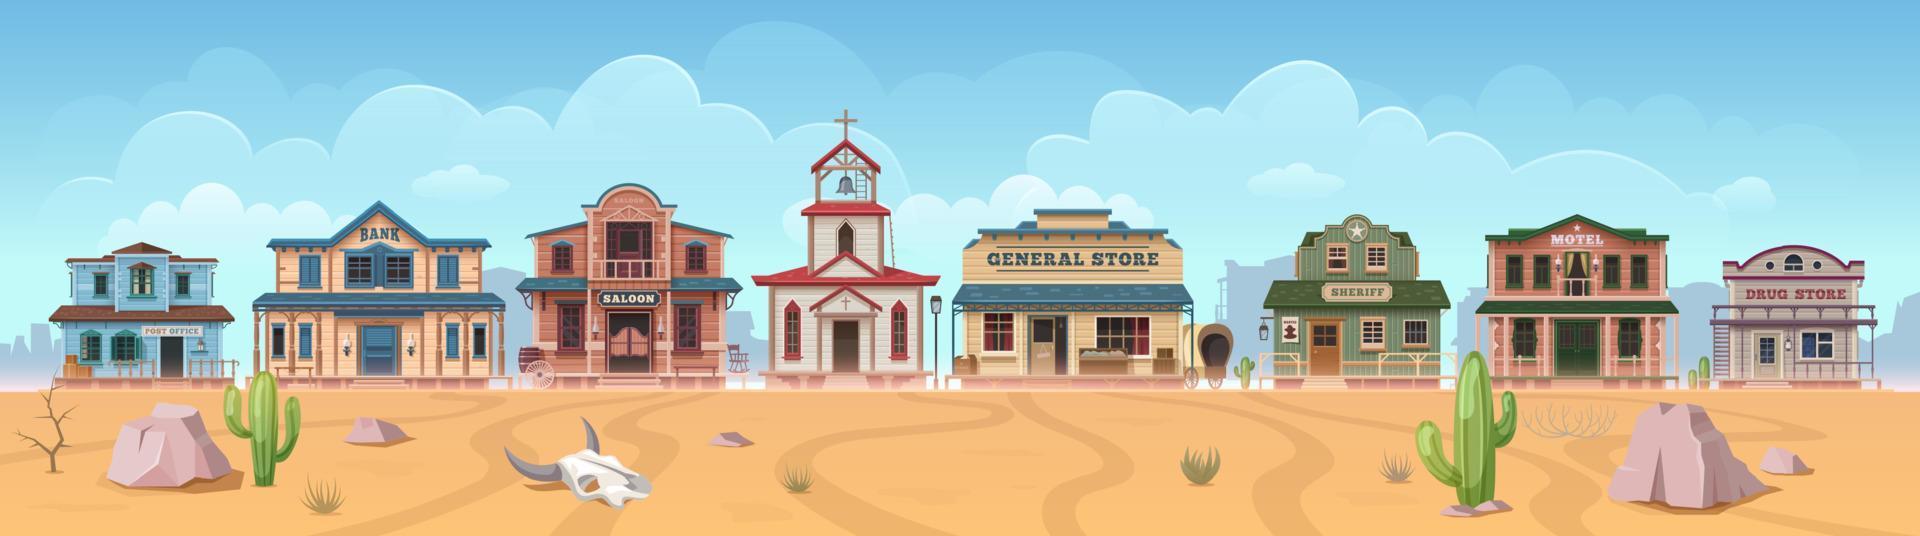 Western wild west town cartoon buildings cityscape vector